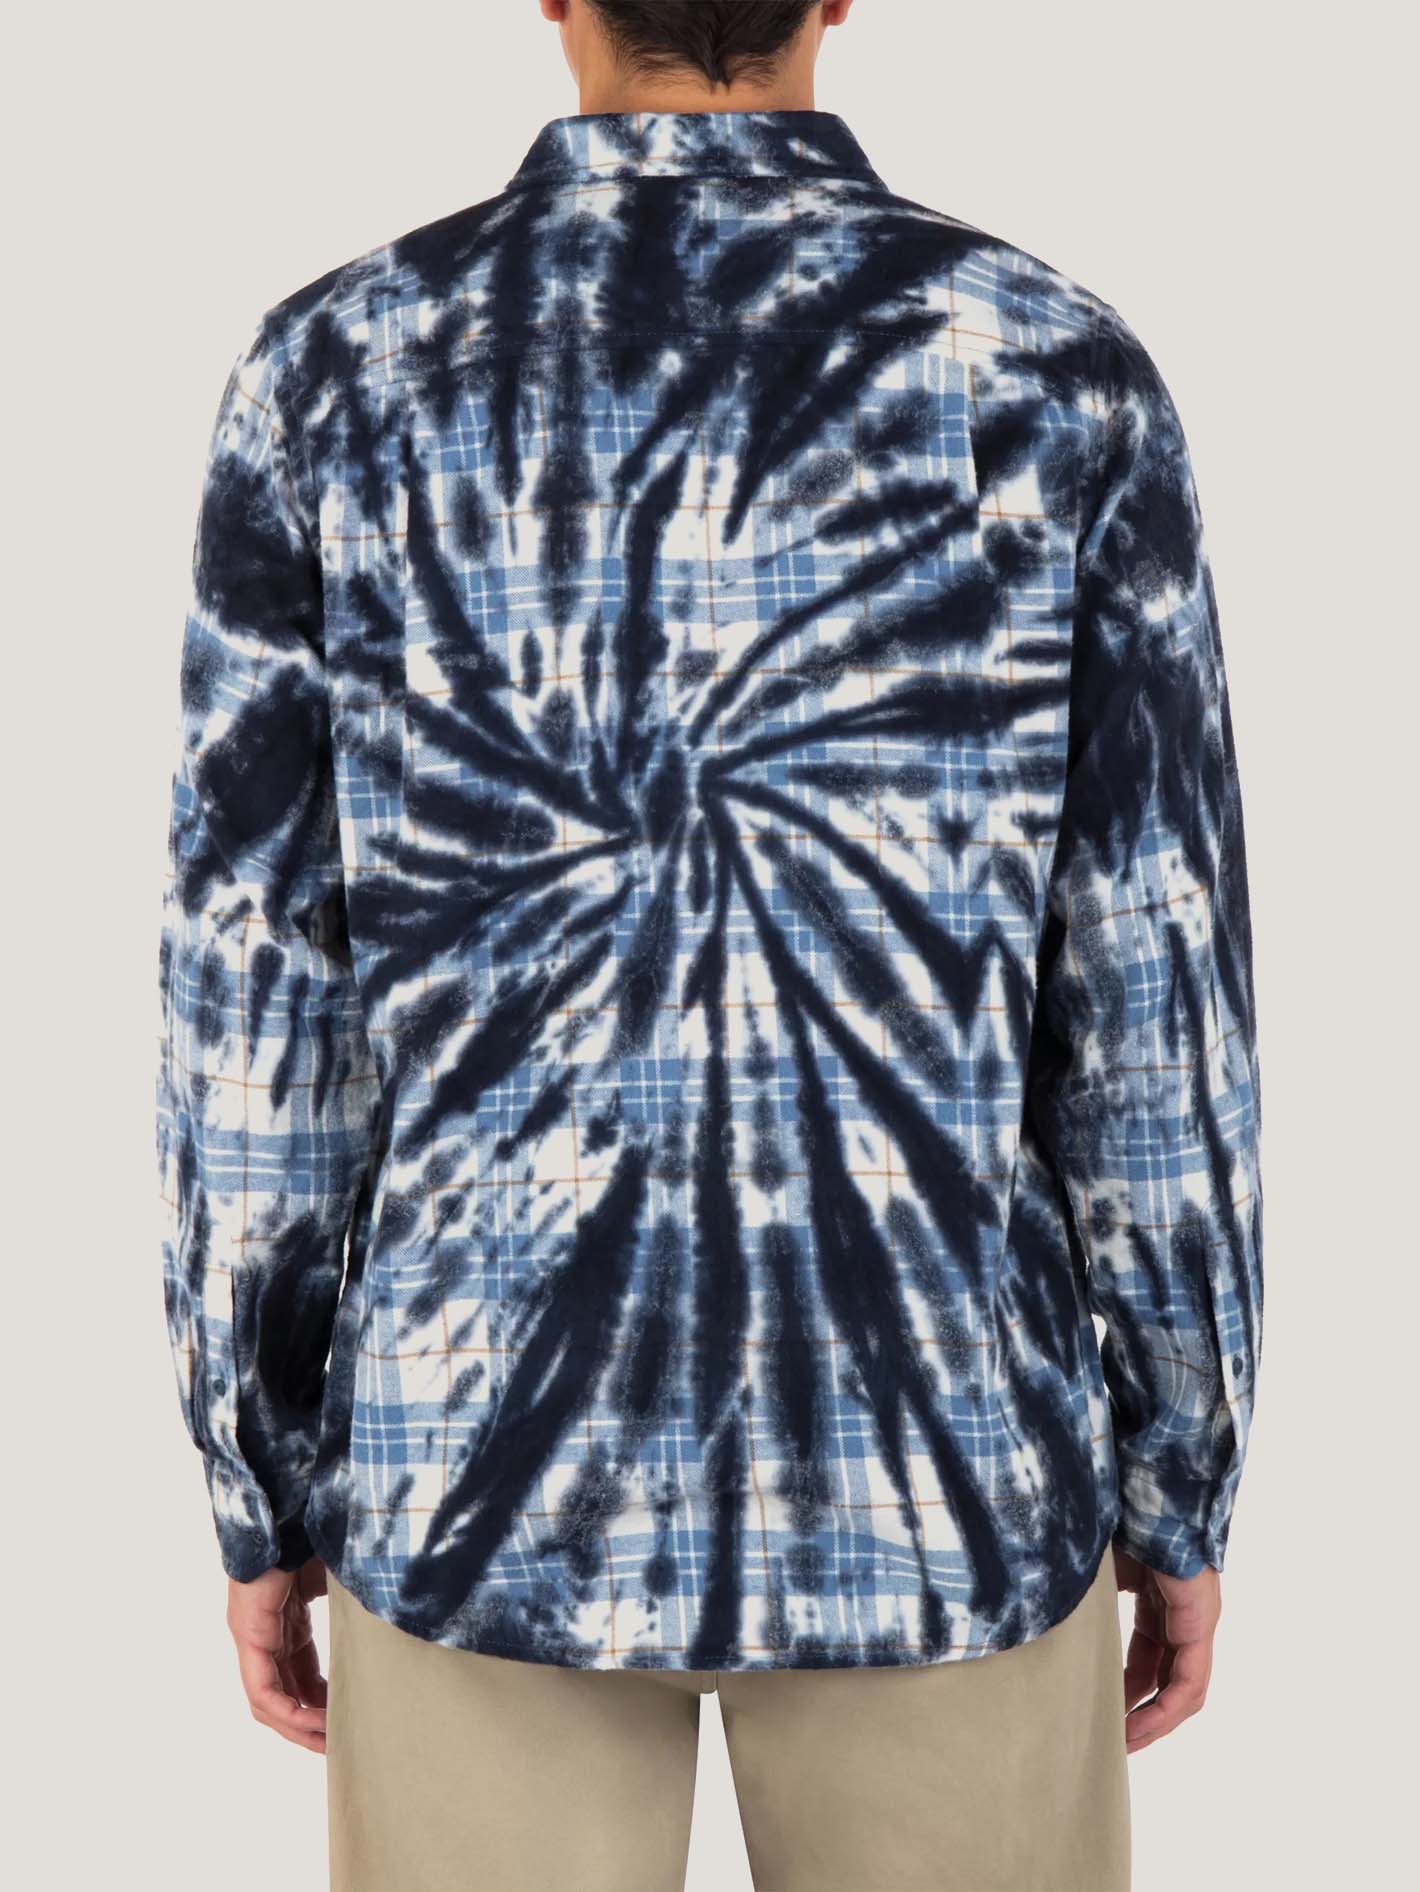 Camisa franela hombre - Portland sherpa lined